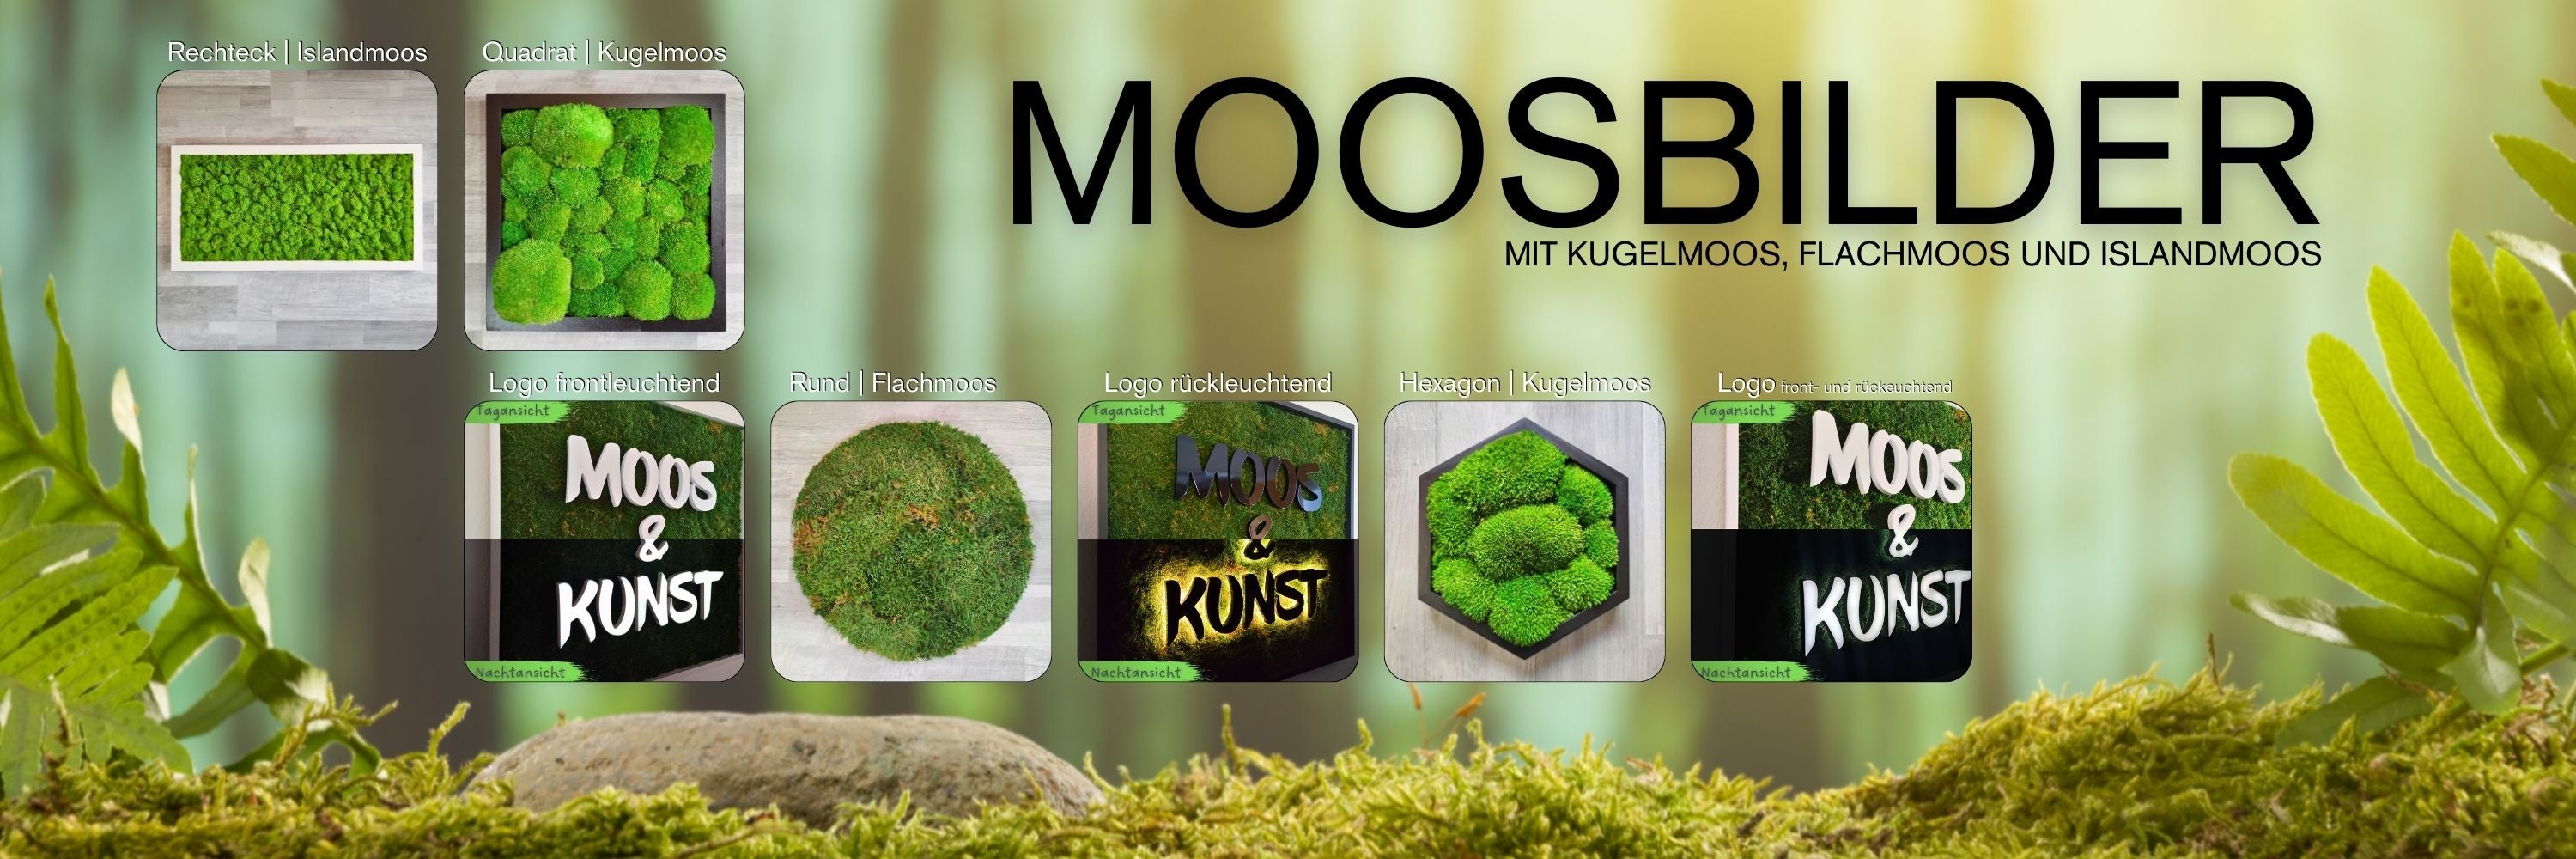 Moosbilder mit Kugelmoos, Islandmoos und Flachmoos. Moos & Kunst - Moosbilder mit Beleuchtung